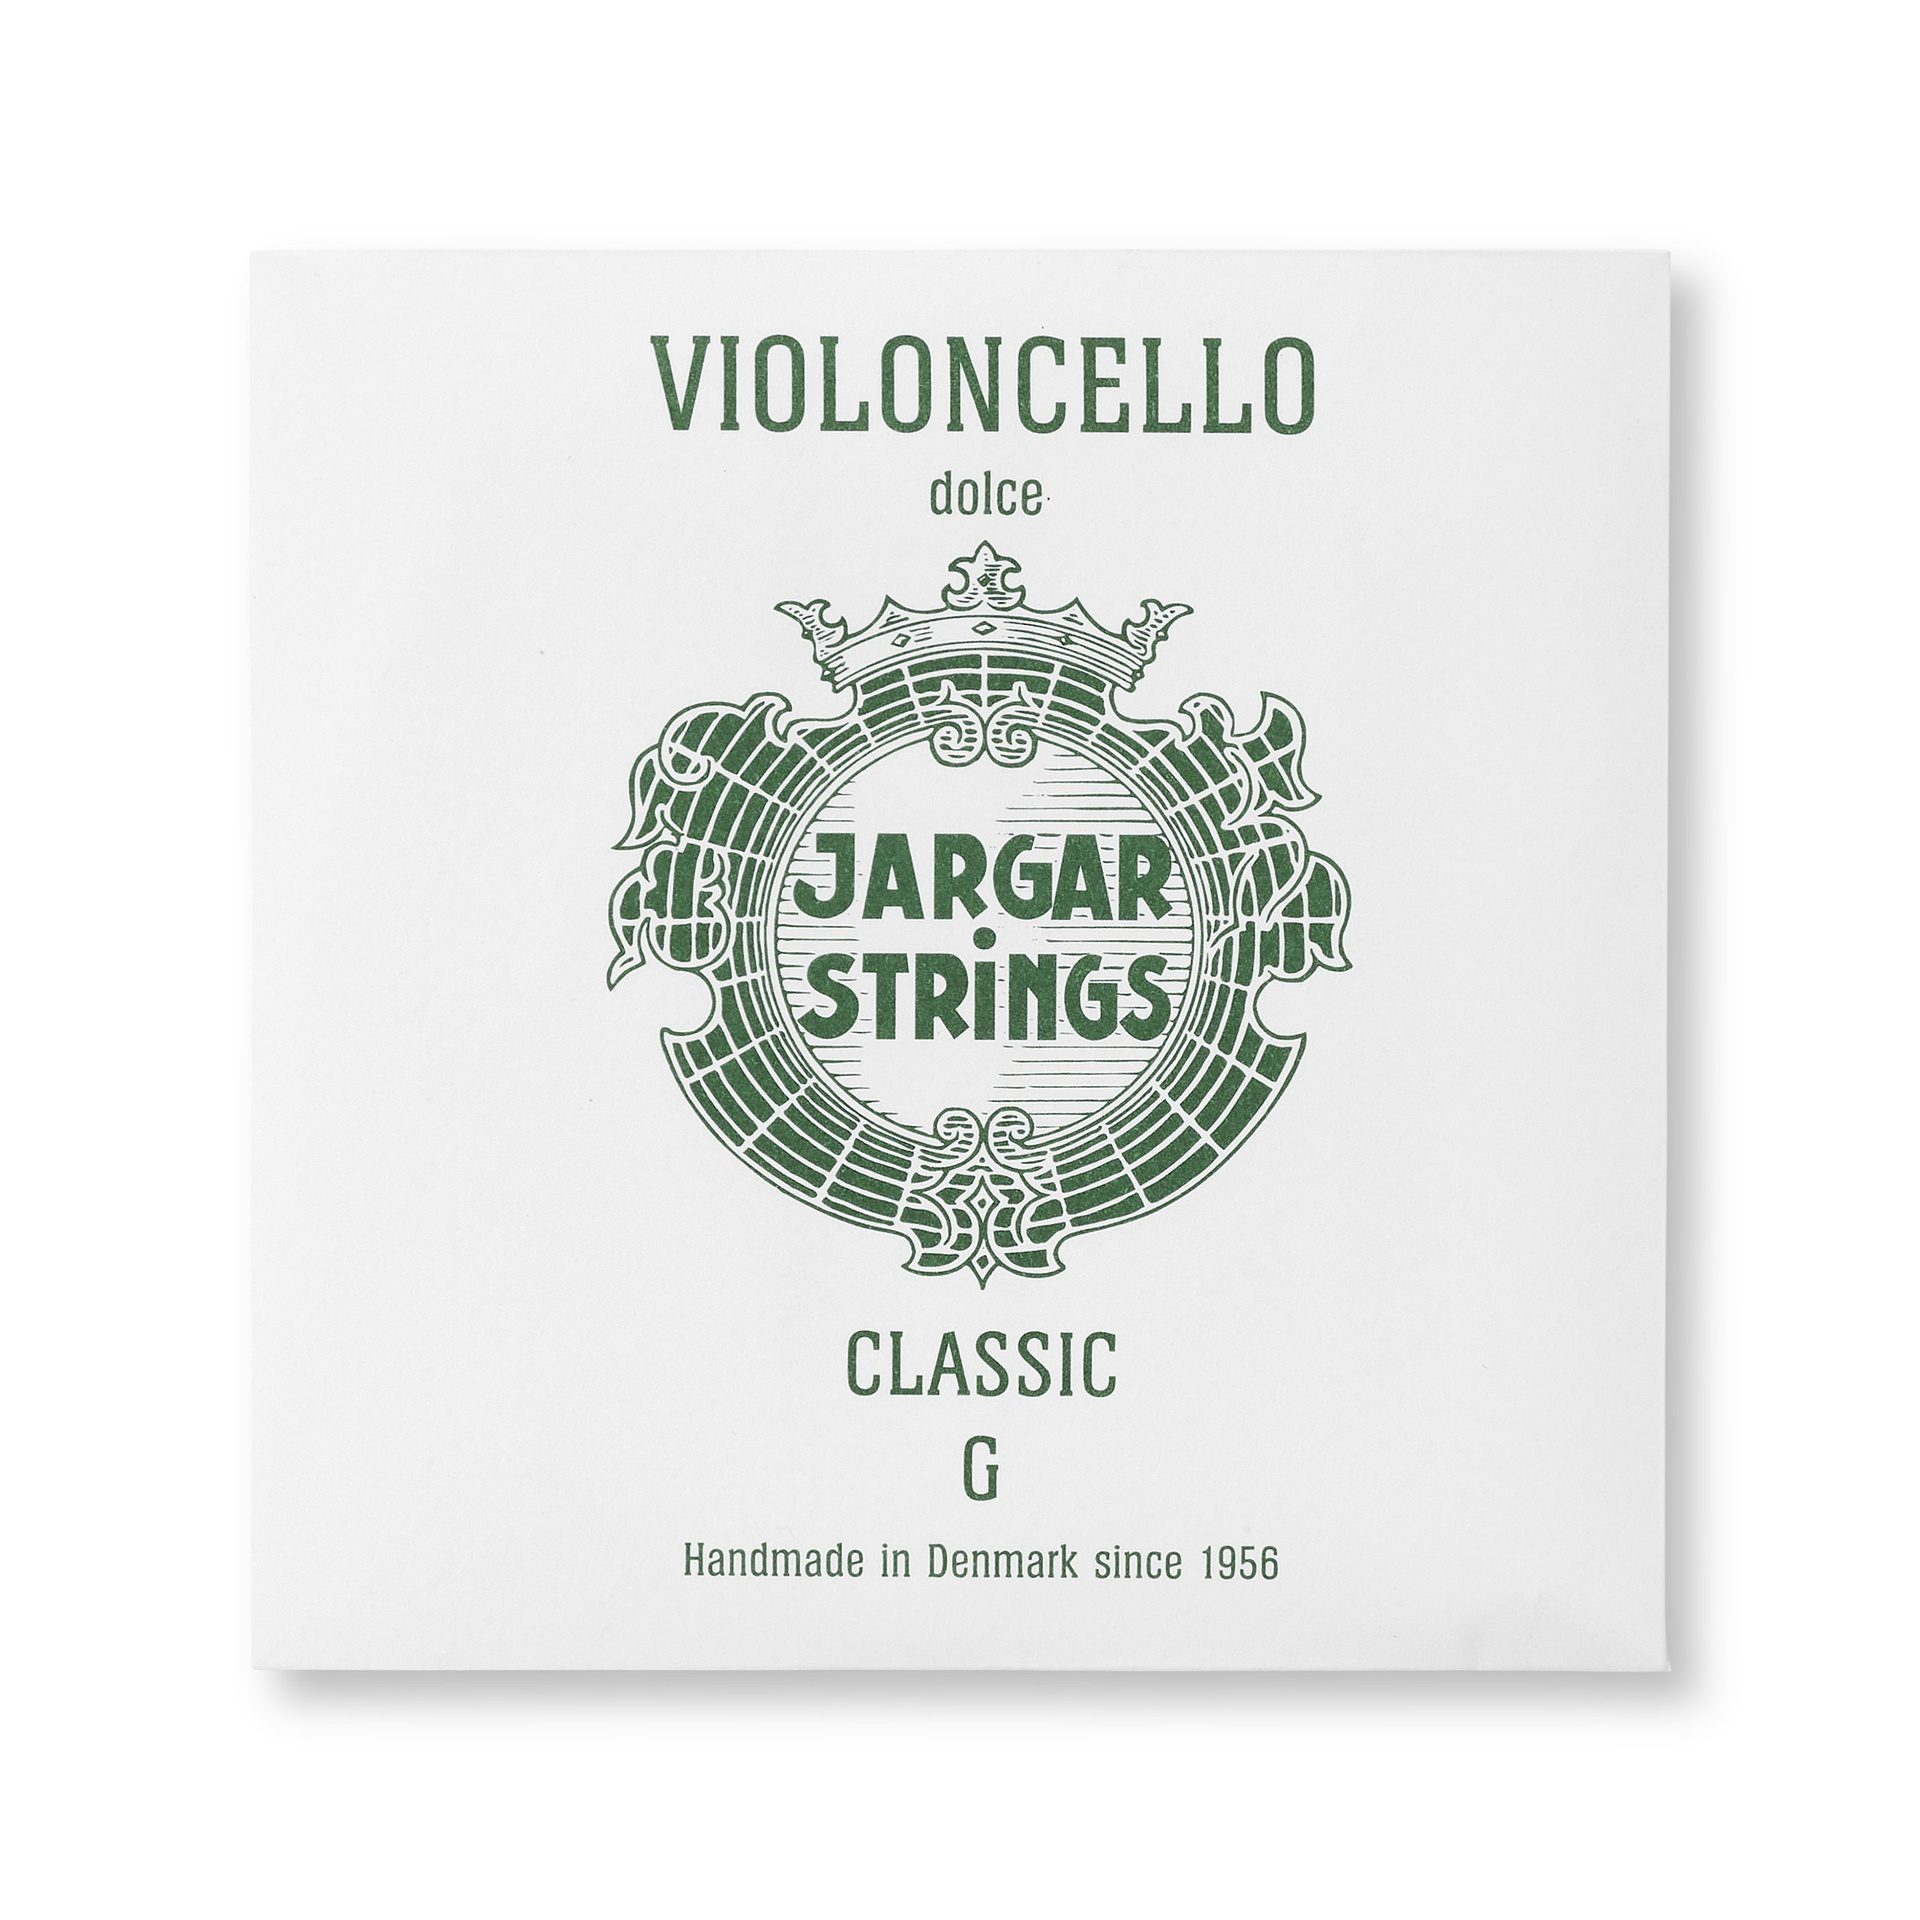 Classic Violoncello - Dolce, Single G String, 4/4